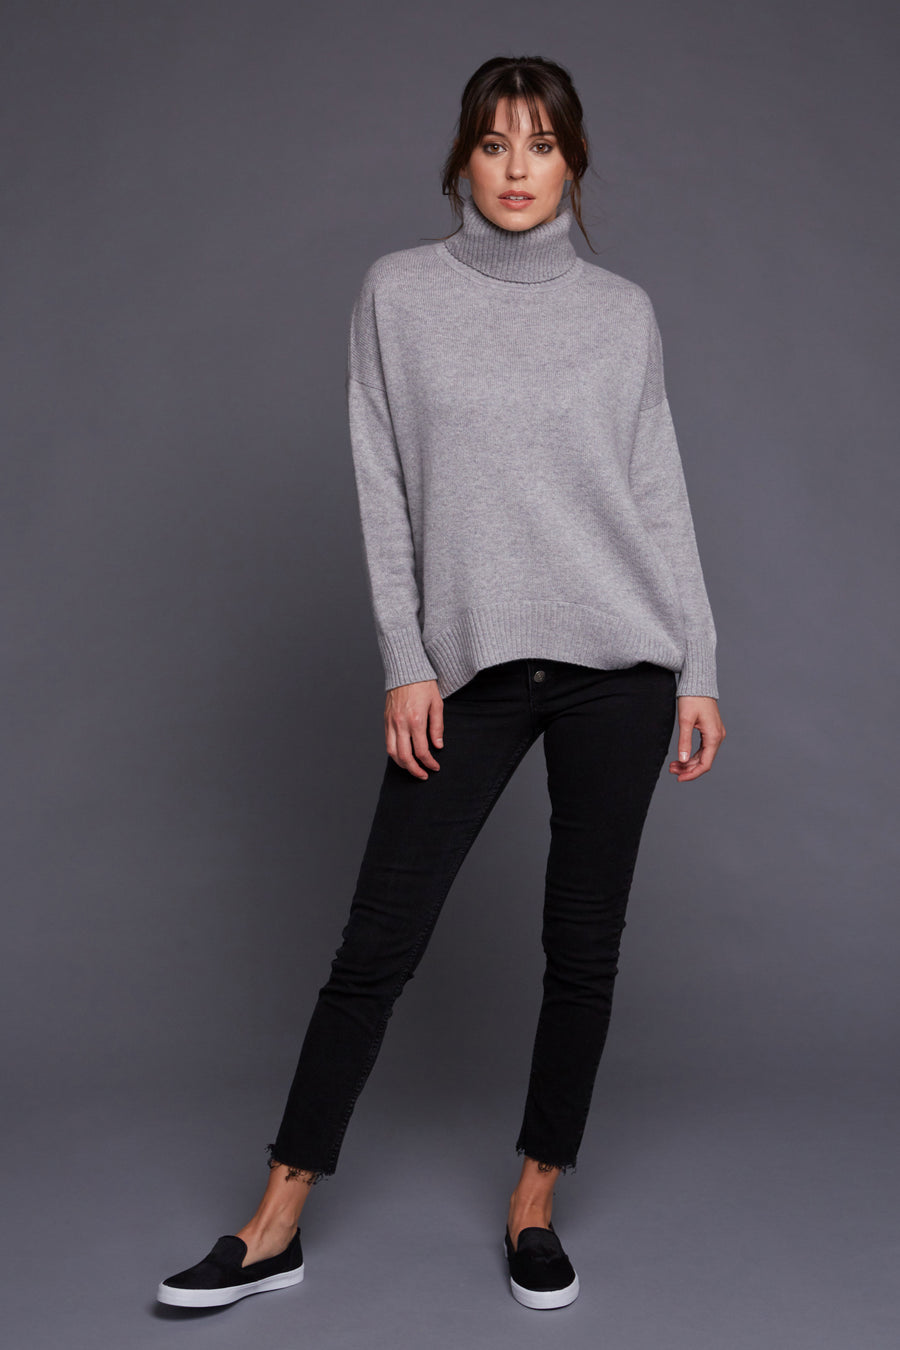 Women's Cotton/Cashmere Sweater, Turtleneck, Black Cashmere Sweater  Turtleneck